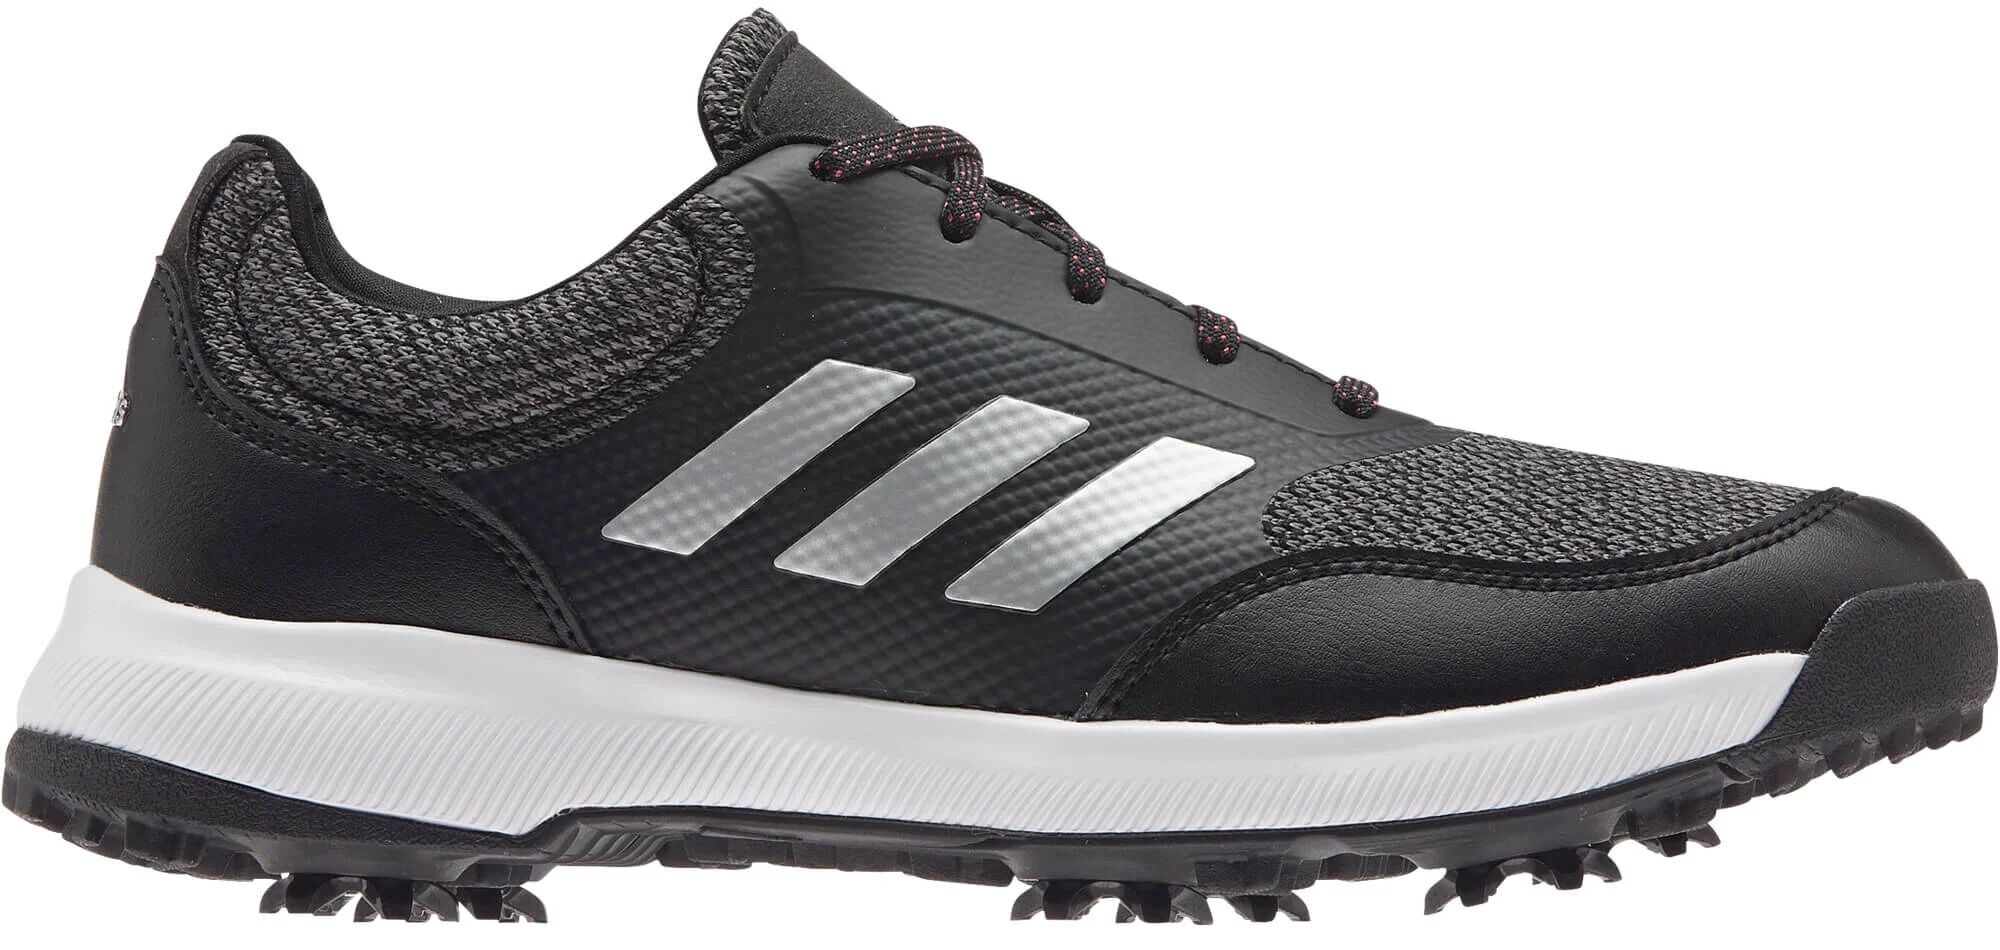 adidas Womens Tech Response 2.0 Golf Shoes - Black/Silver/Grey - 6 - M